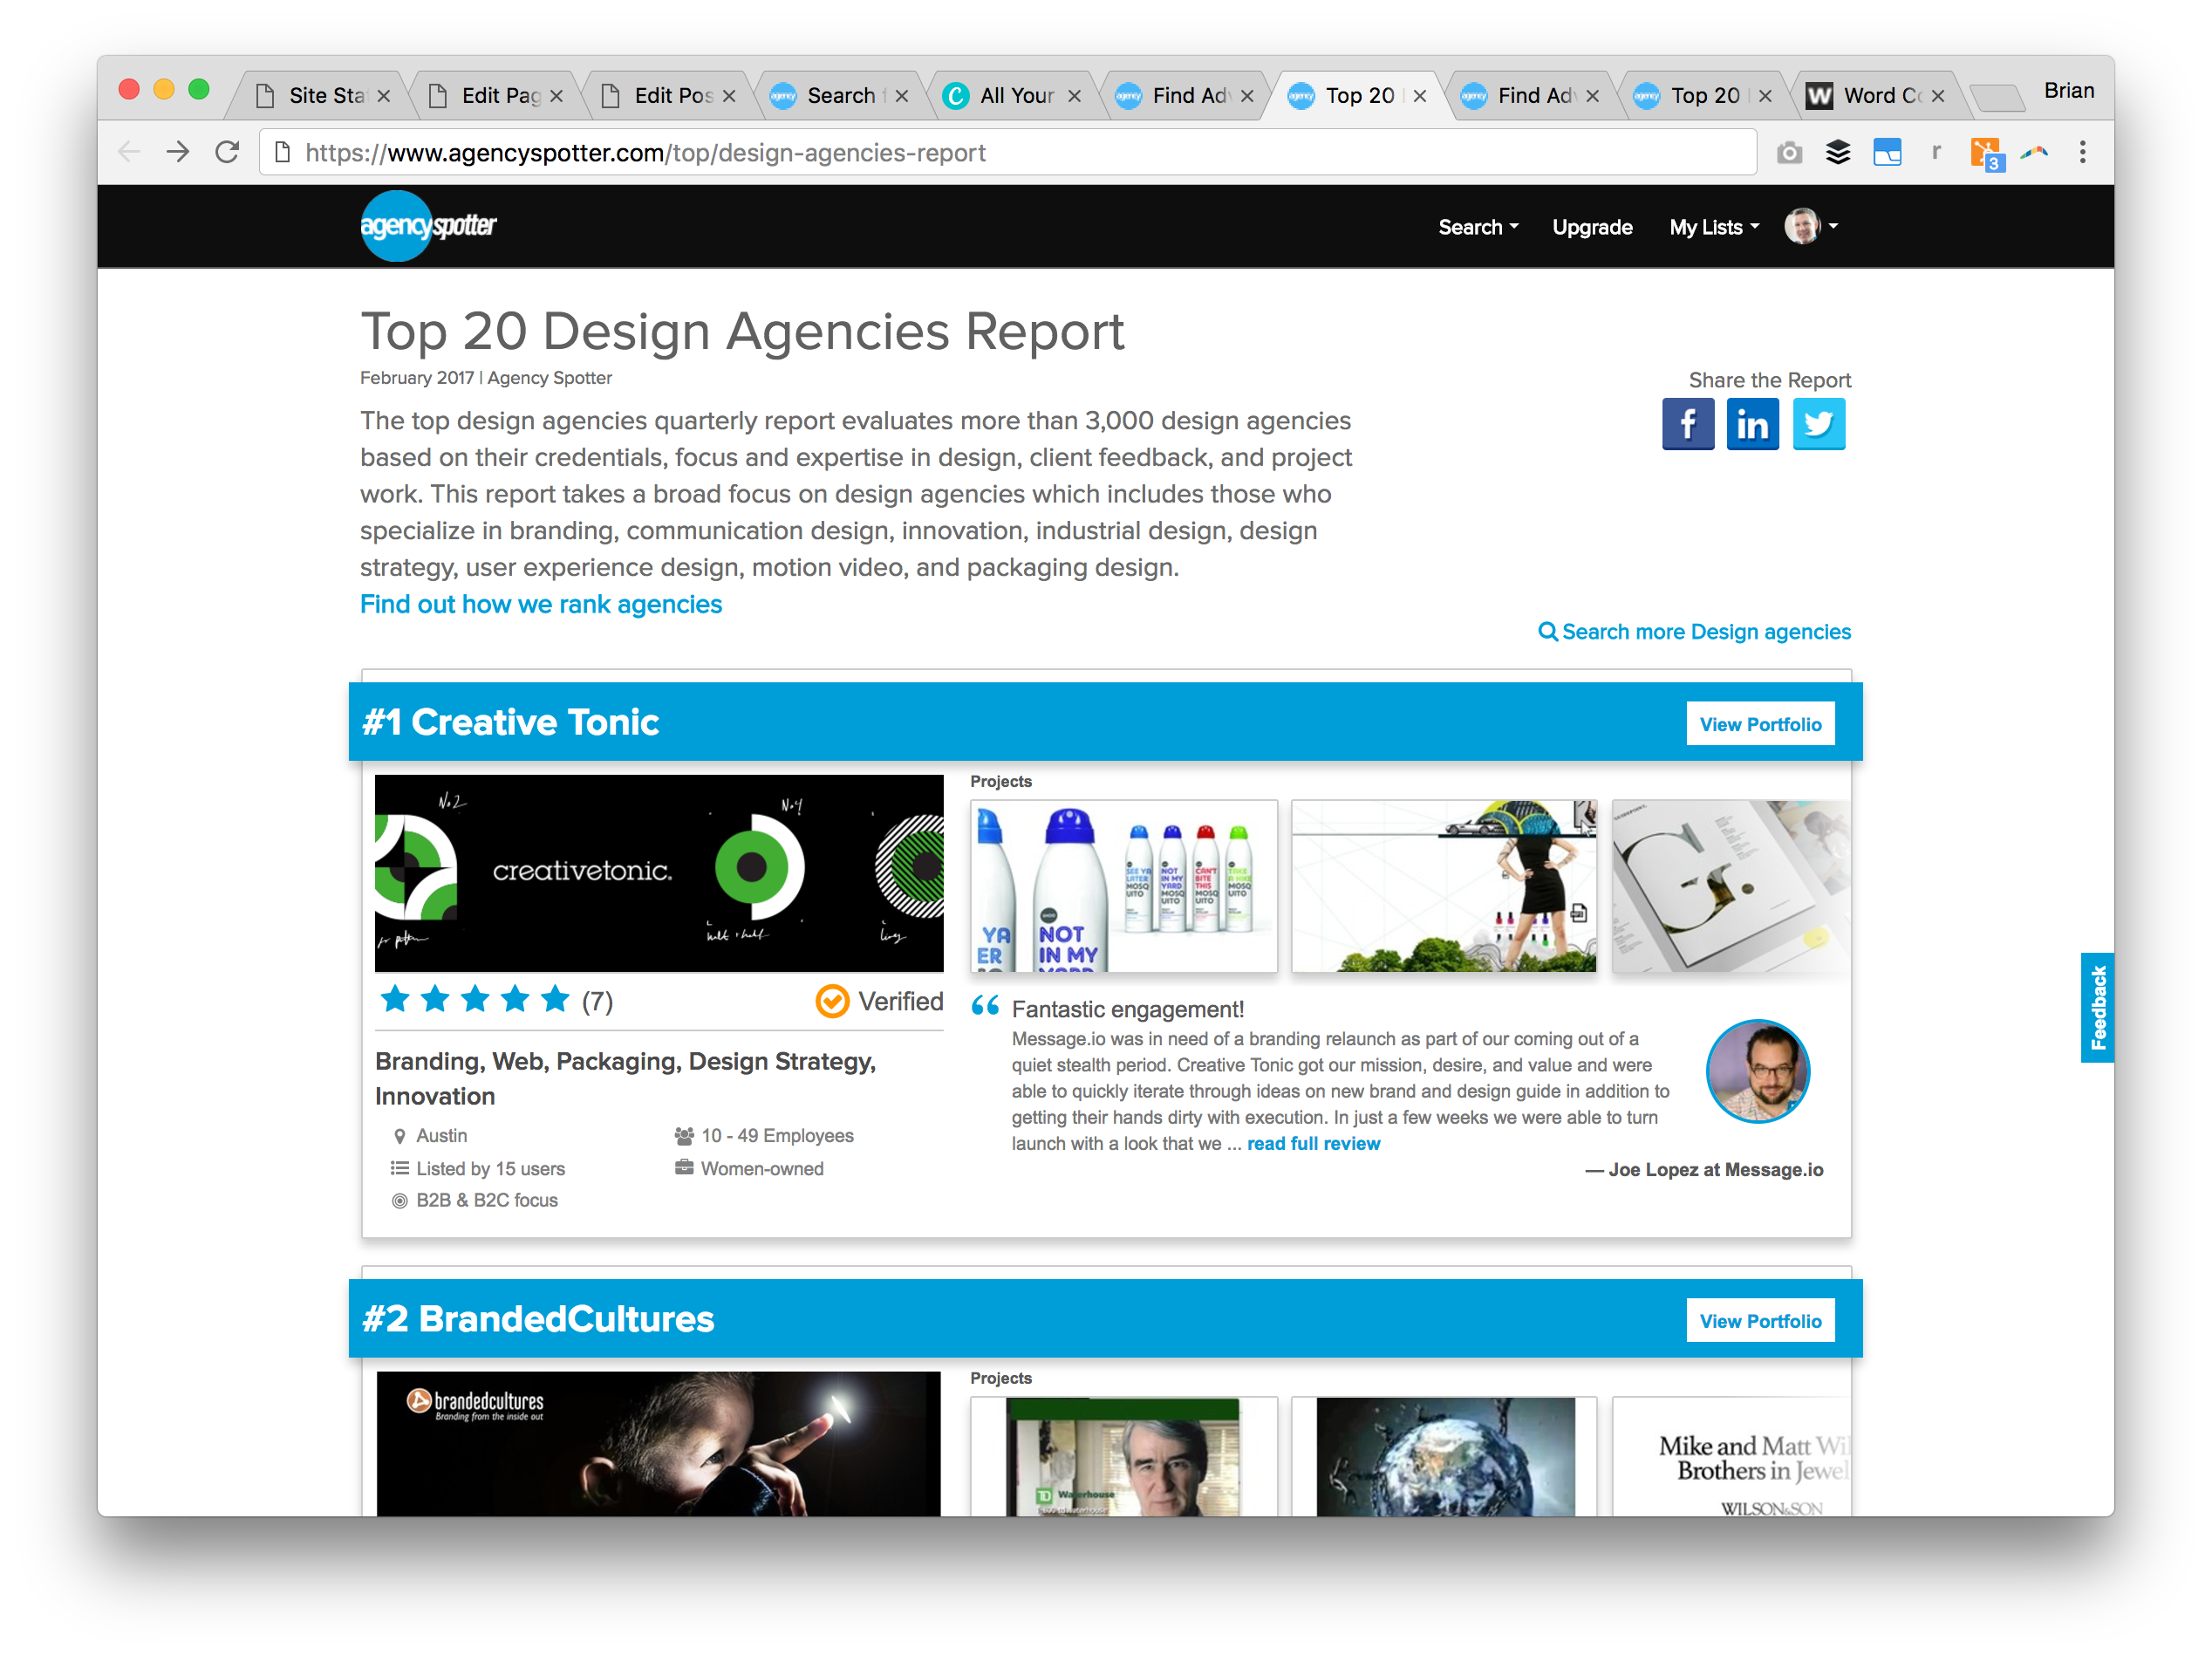 Preview: Top Design Agencies Report February 2017